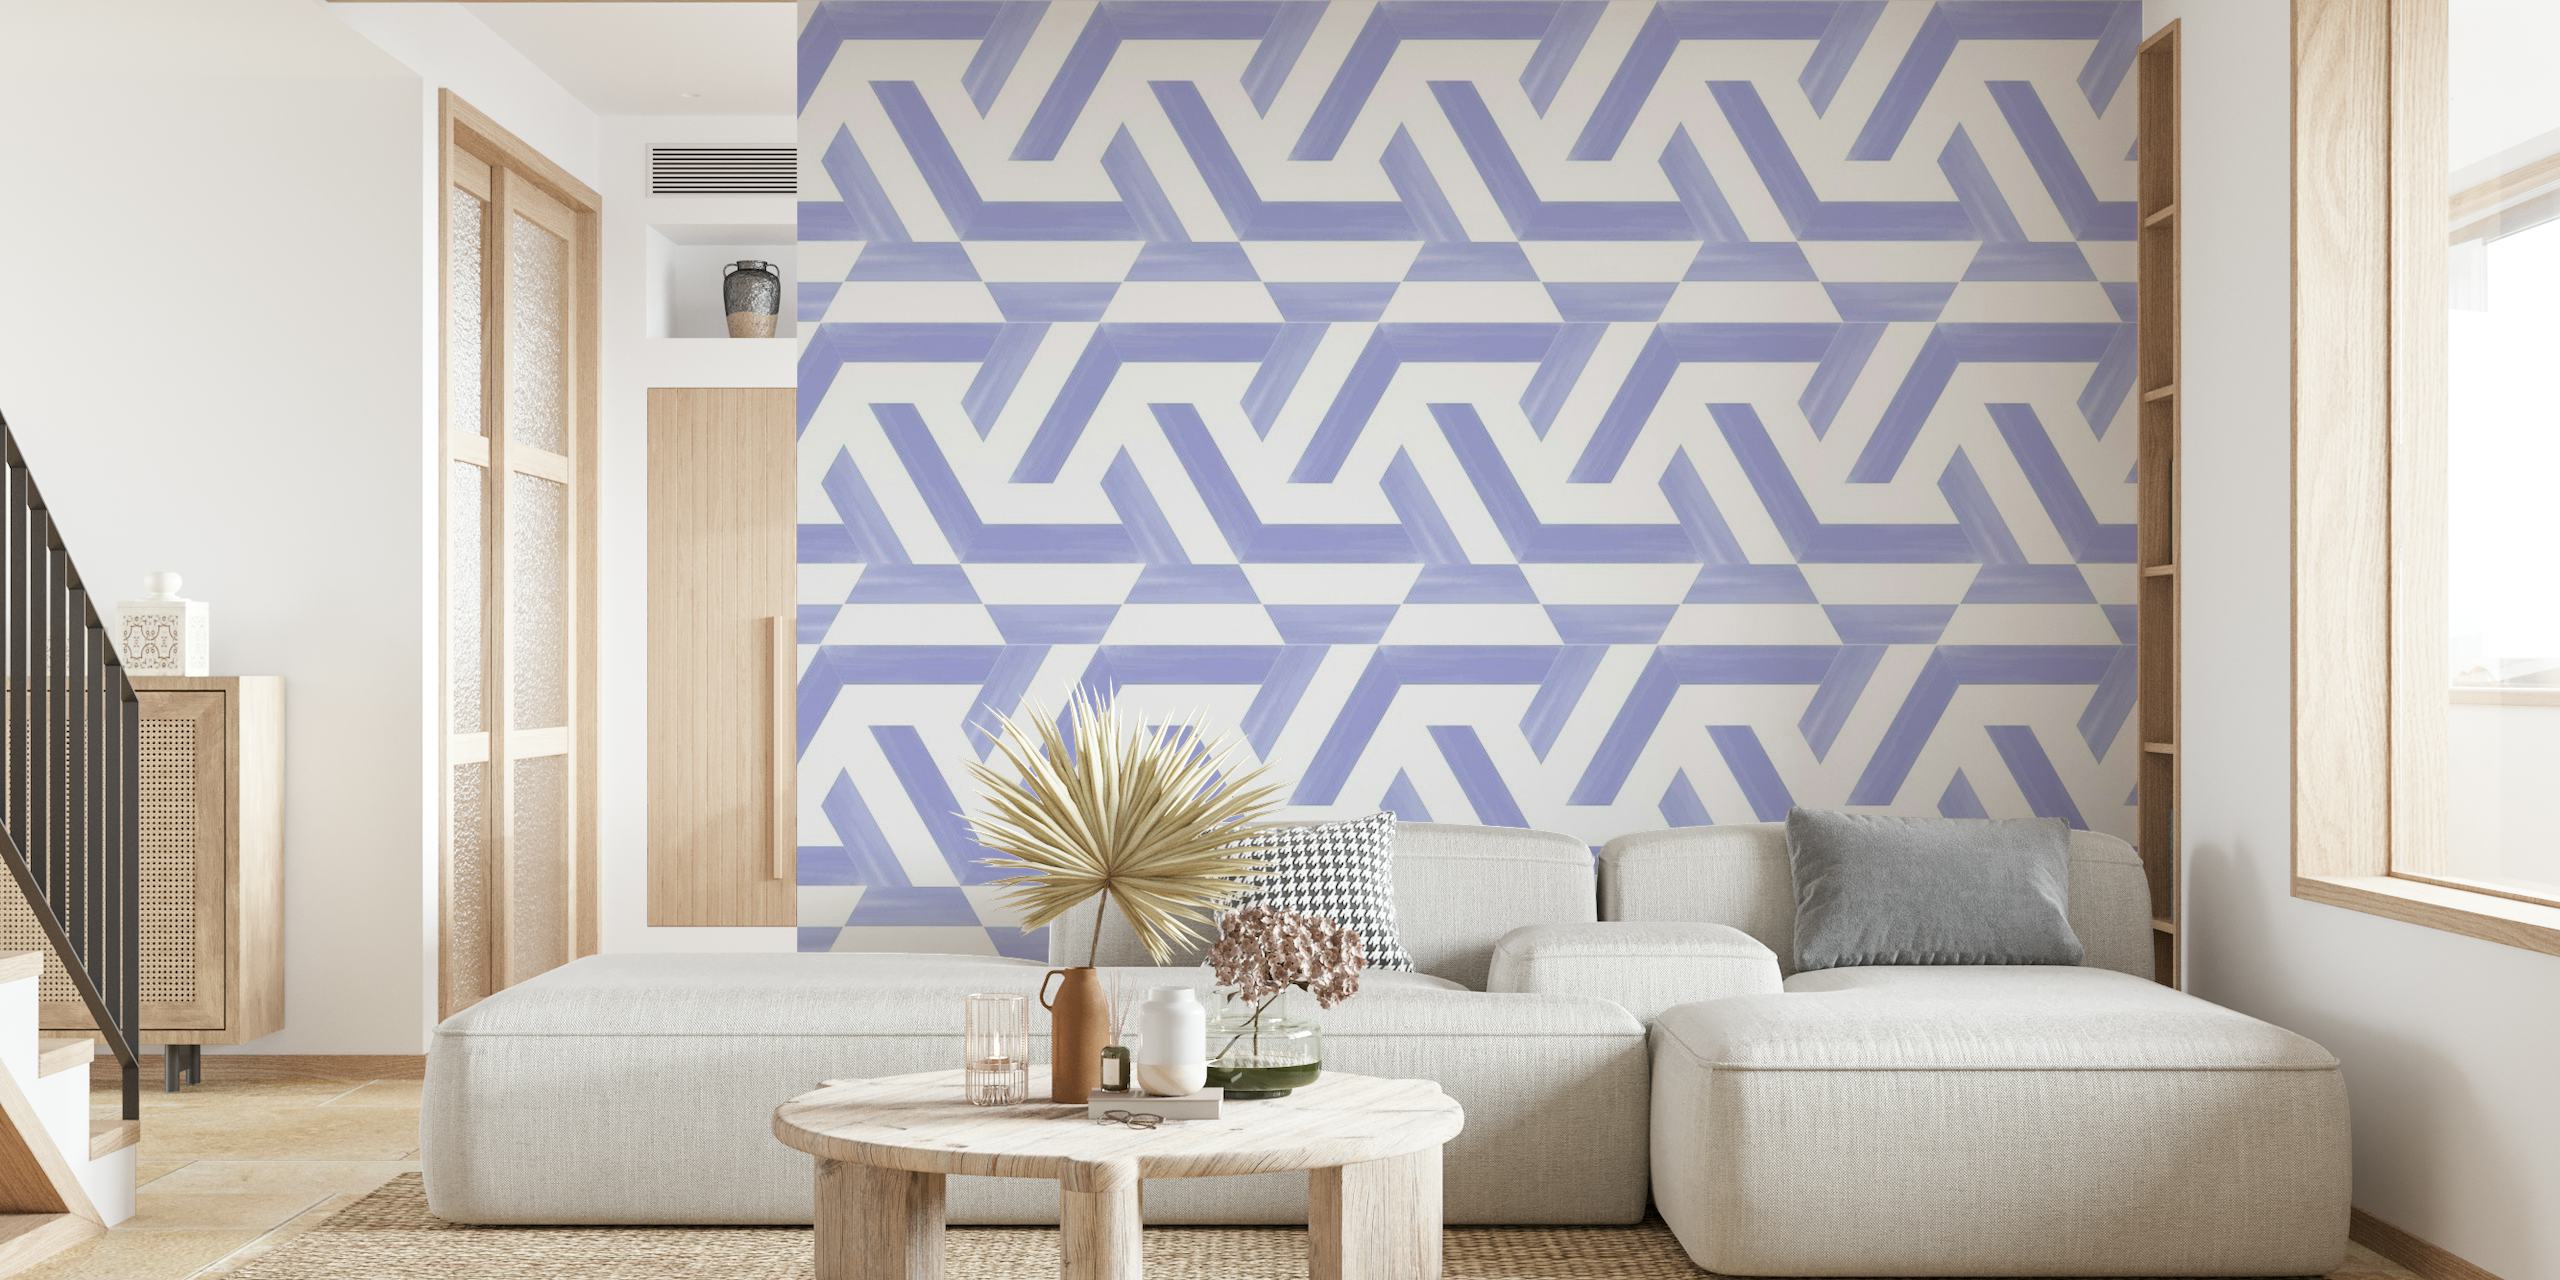 Playful Hexagon Lilac Tiles Combo 1 wallpaper